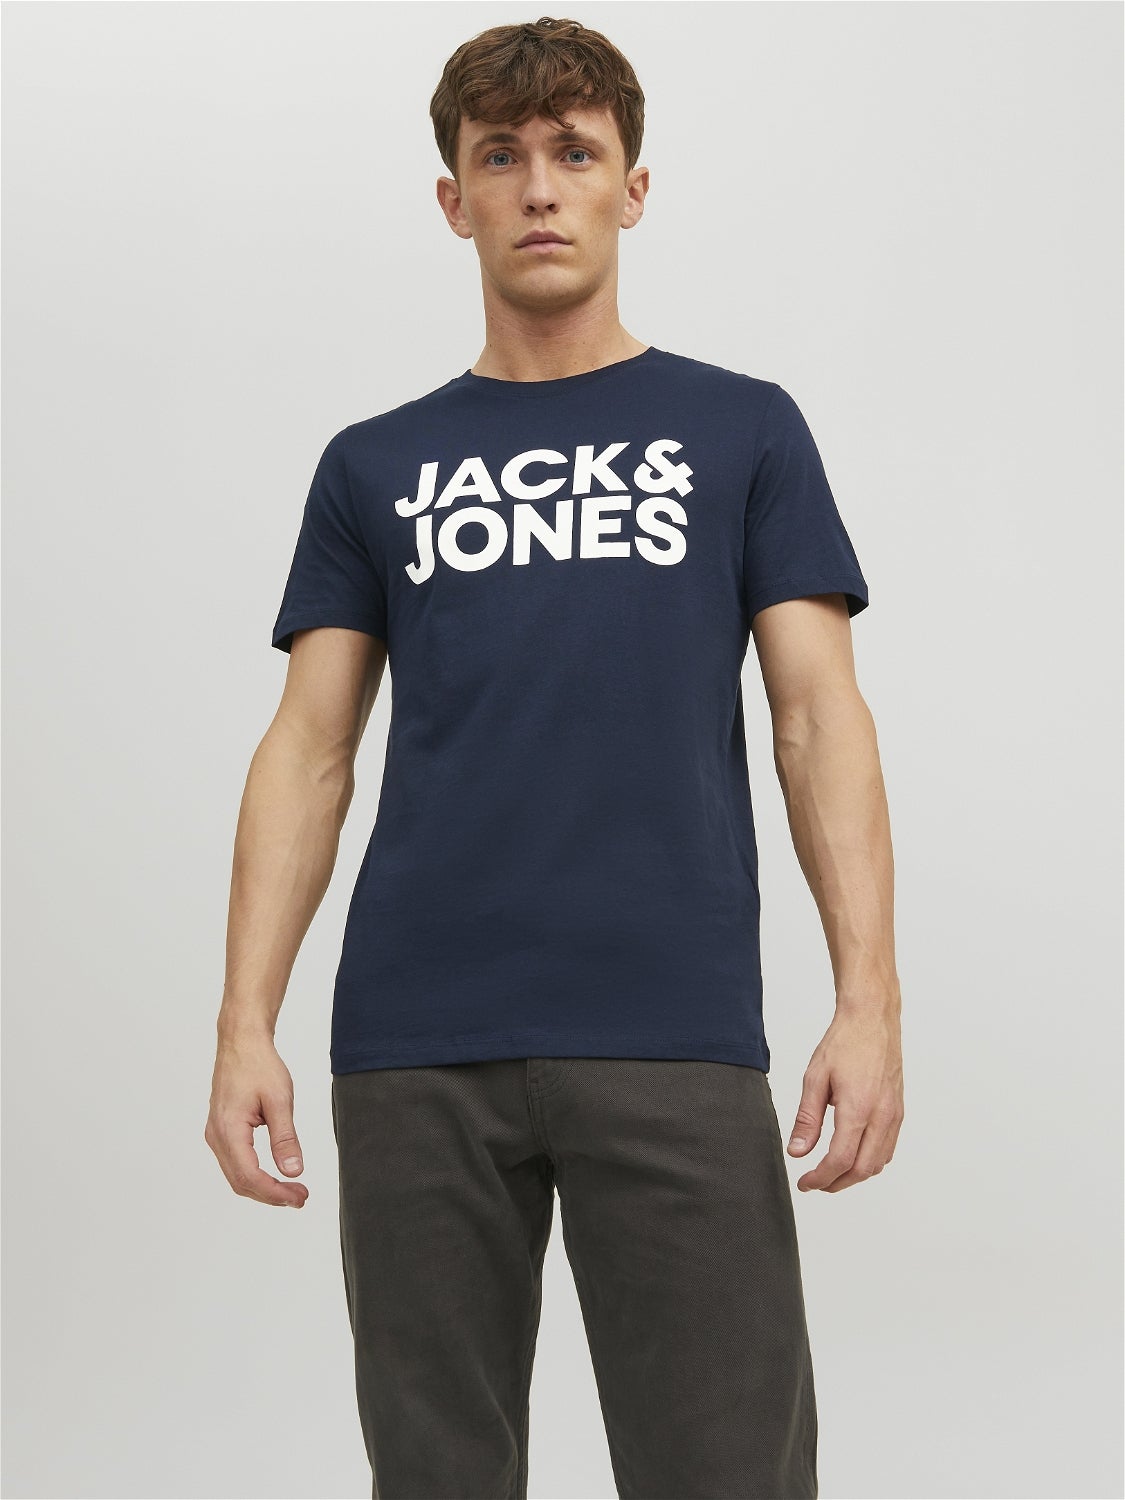 Jack & Jones T-shirt discount 64% Blue S MEN FASHION Shirts & T-shirts Basic 